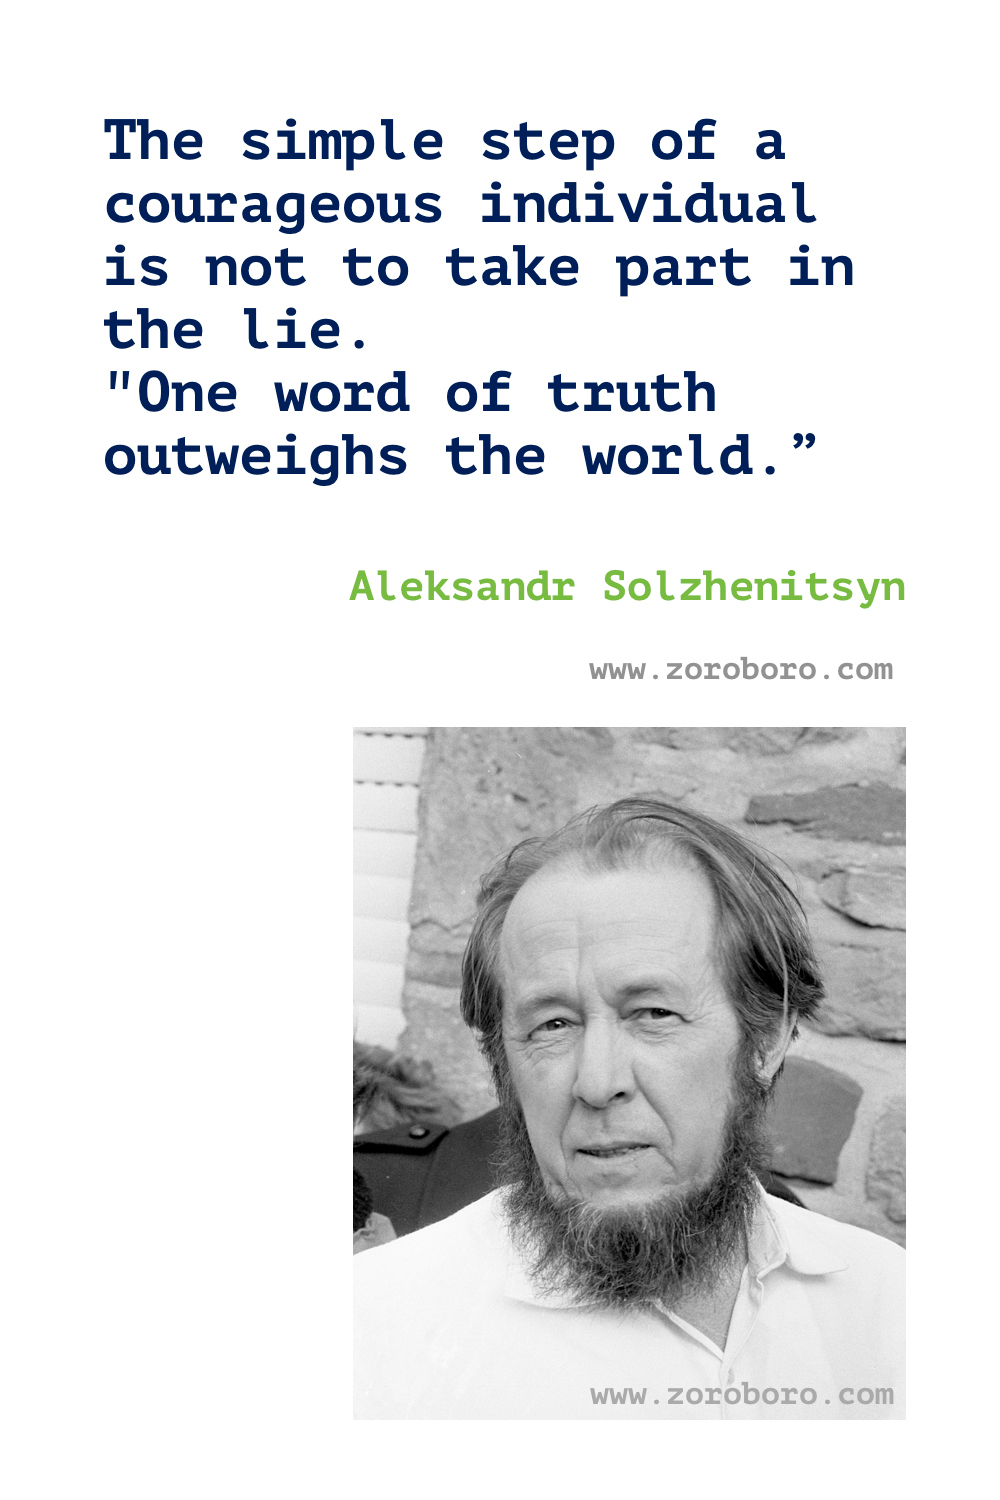 Aleksandr Solzhenitsyn Quotes. Aleksandr Solzhenitsyn The Gulag Archipelago Quotes, Aleksandr Solzhenitsyn In the First Circle Quotes & Aleksandr Solzhenitsyn Cancer Ward Quotes. Aleksandr Solzhenitsyn Books Quotes. Aleksandr Solzhenitsyn